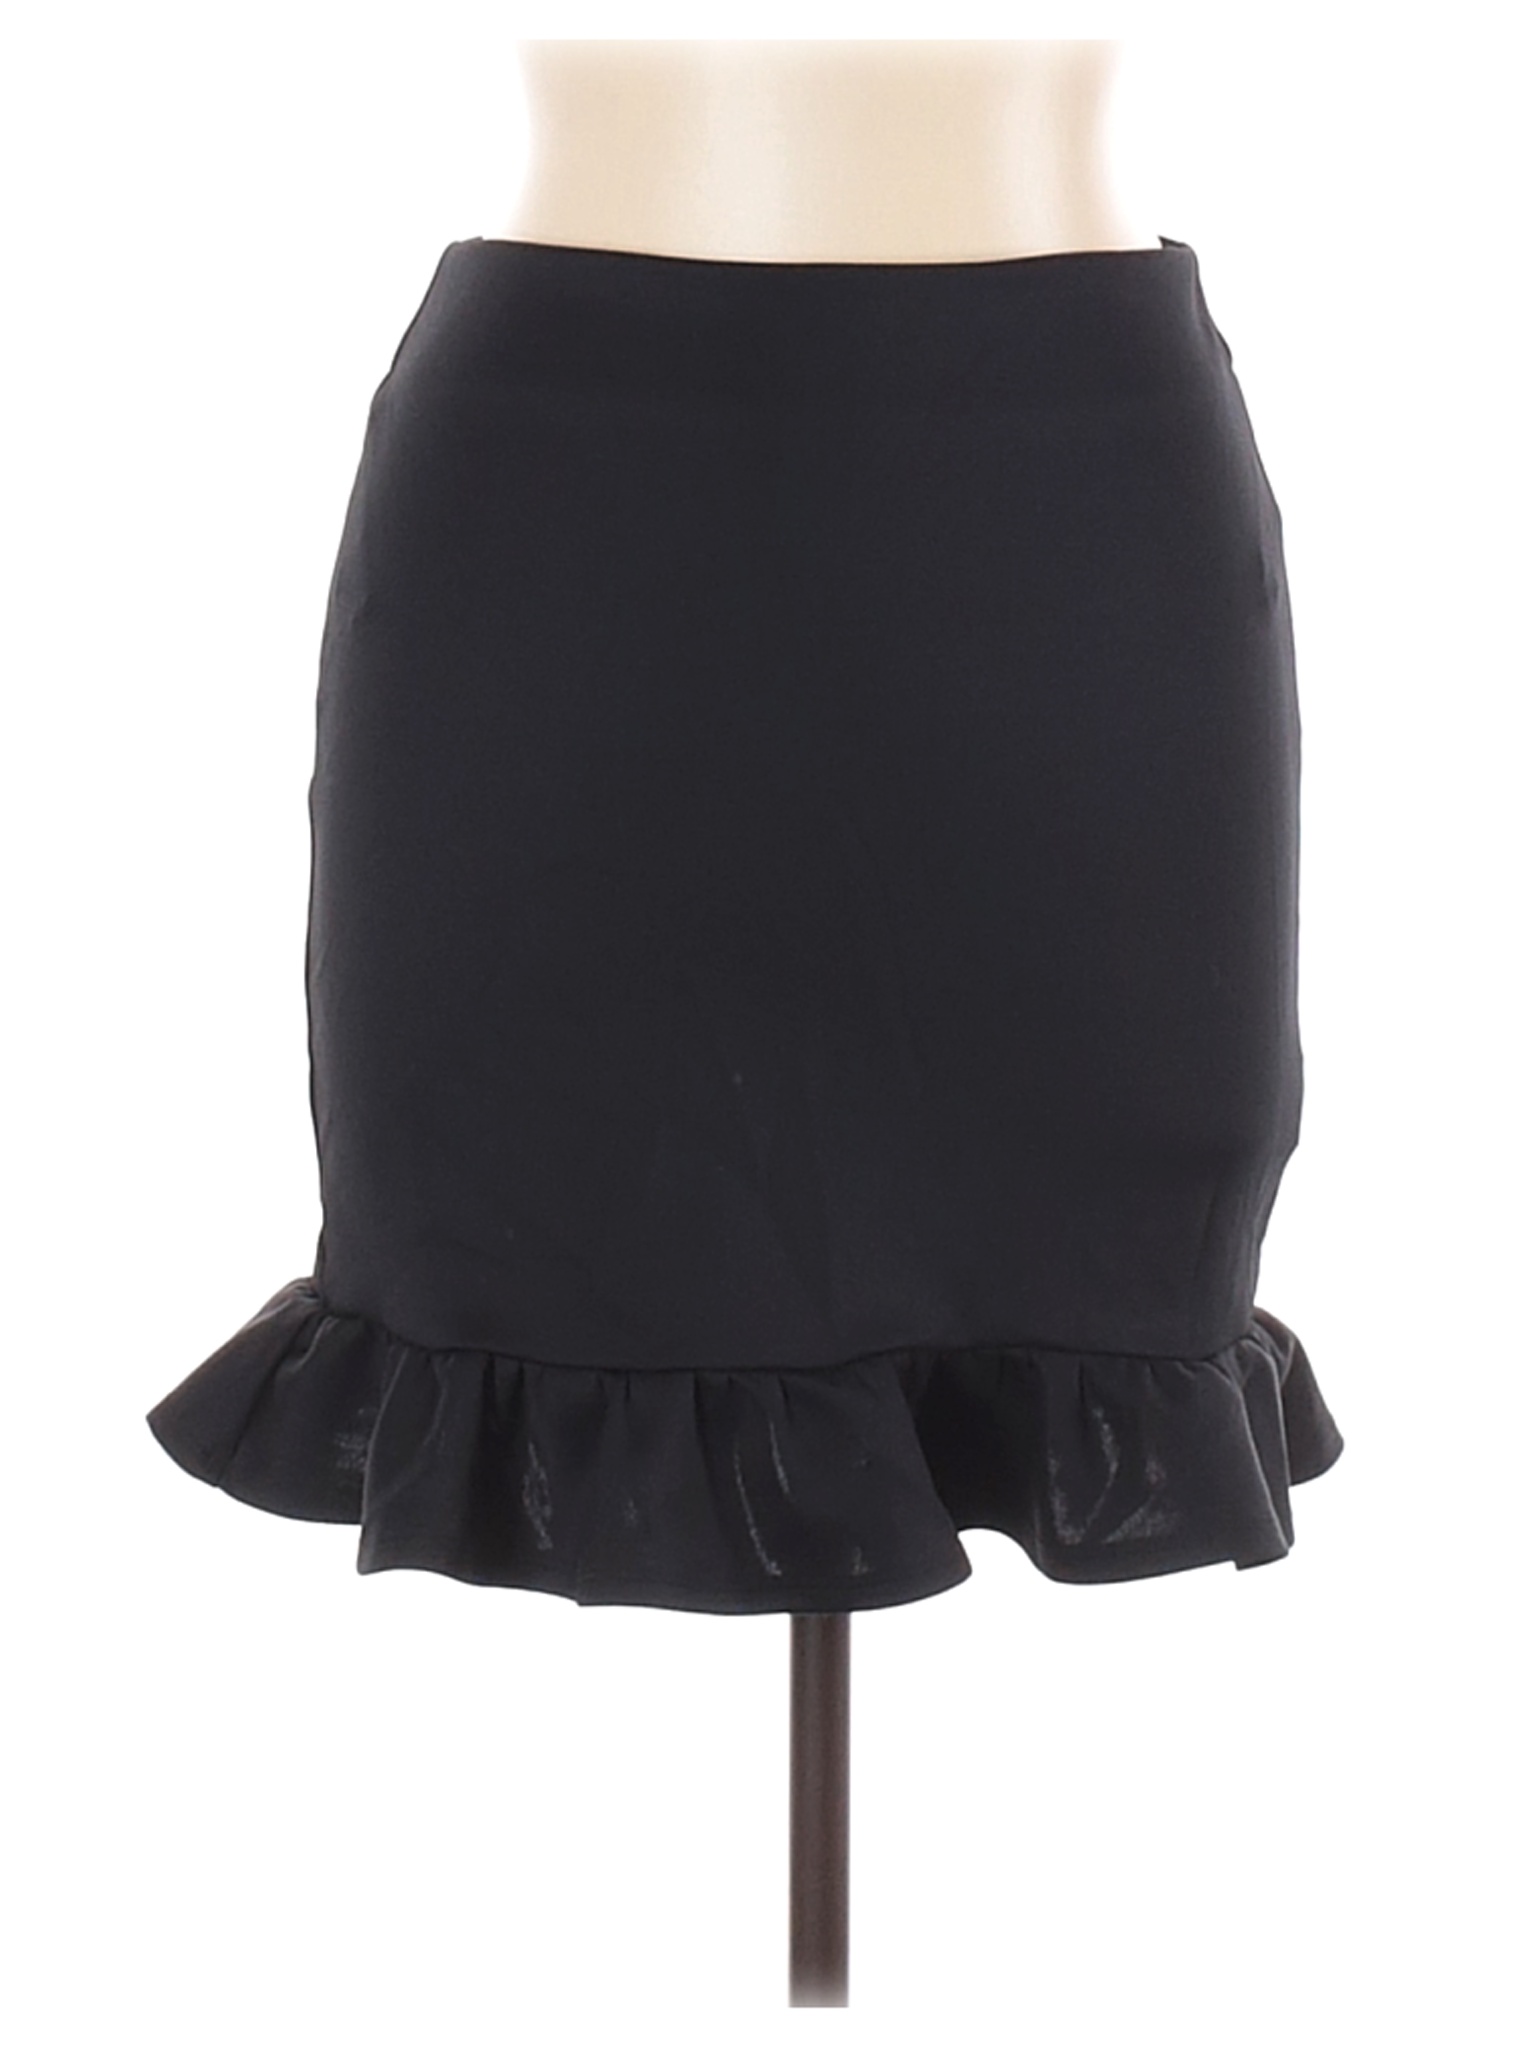 Shein Women Black Casual Skirt L | eBay